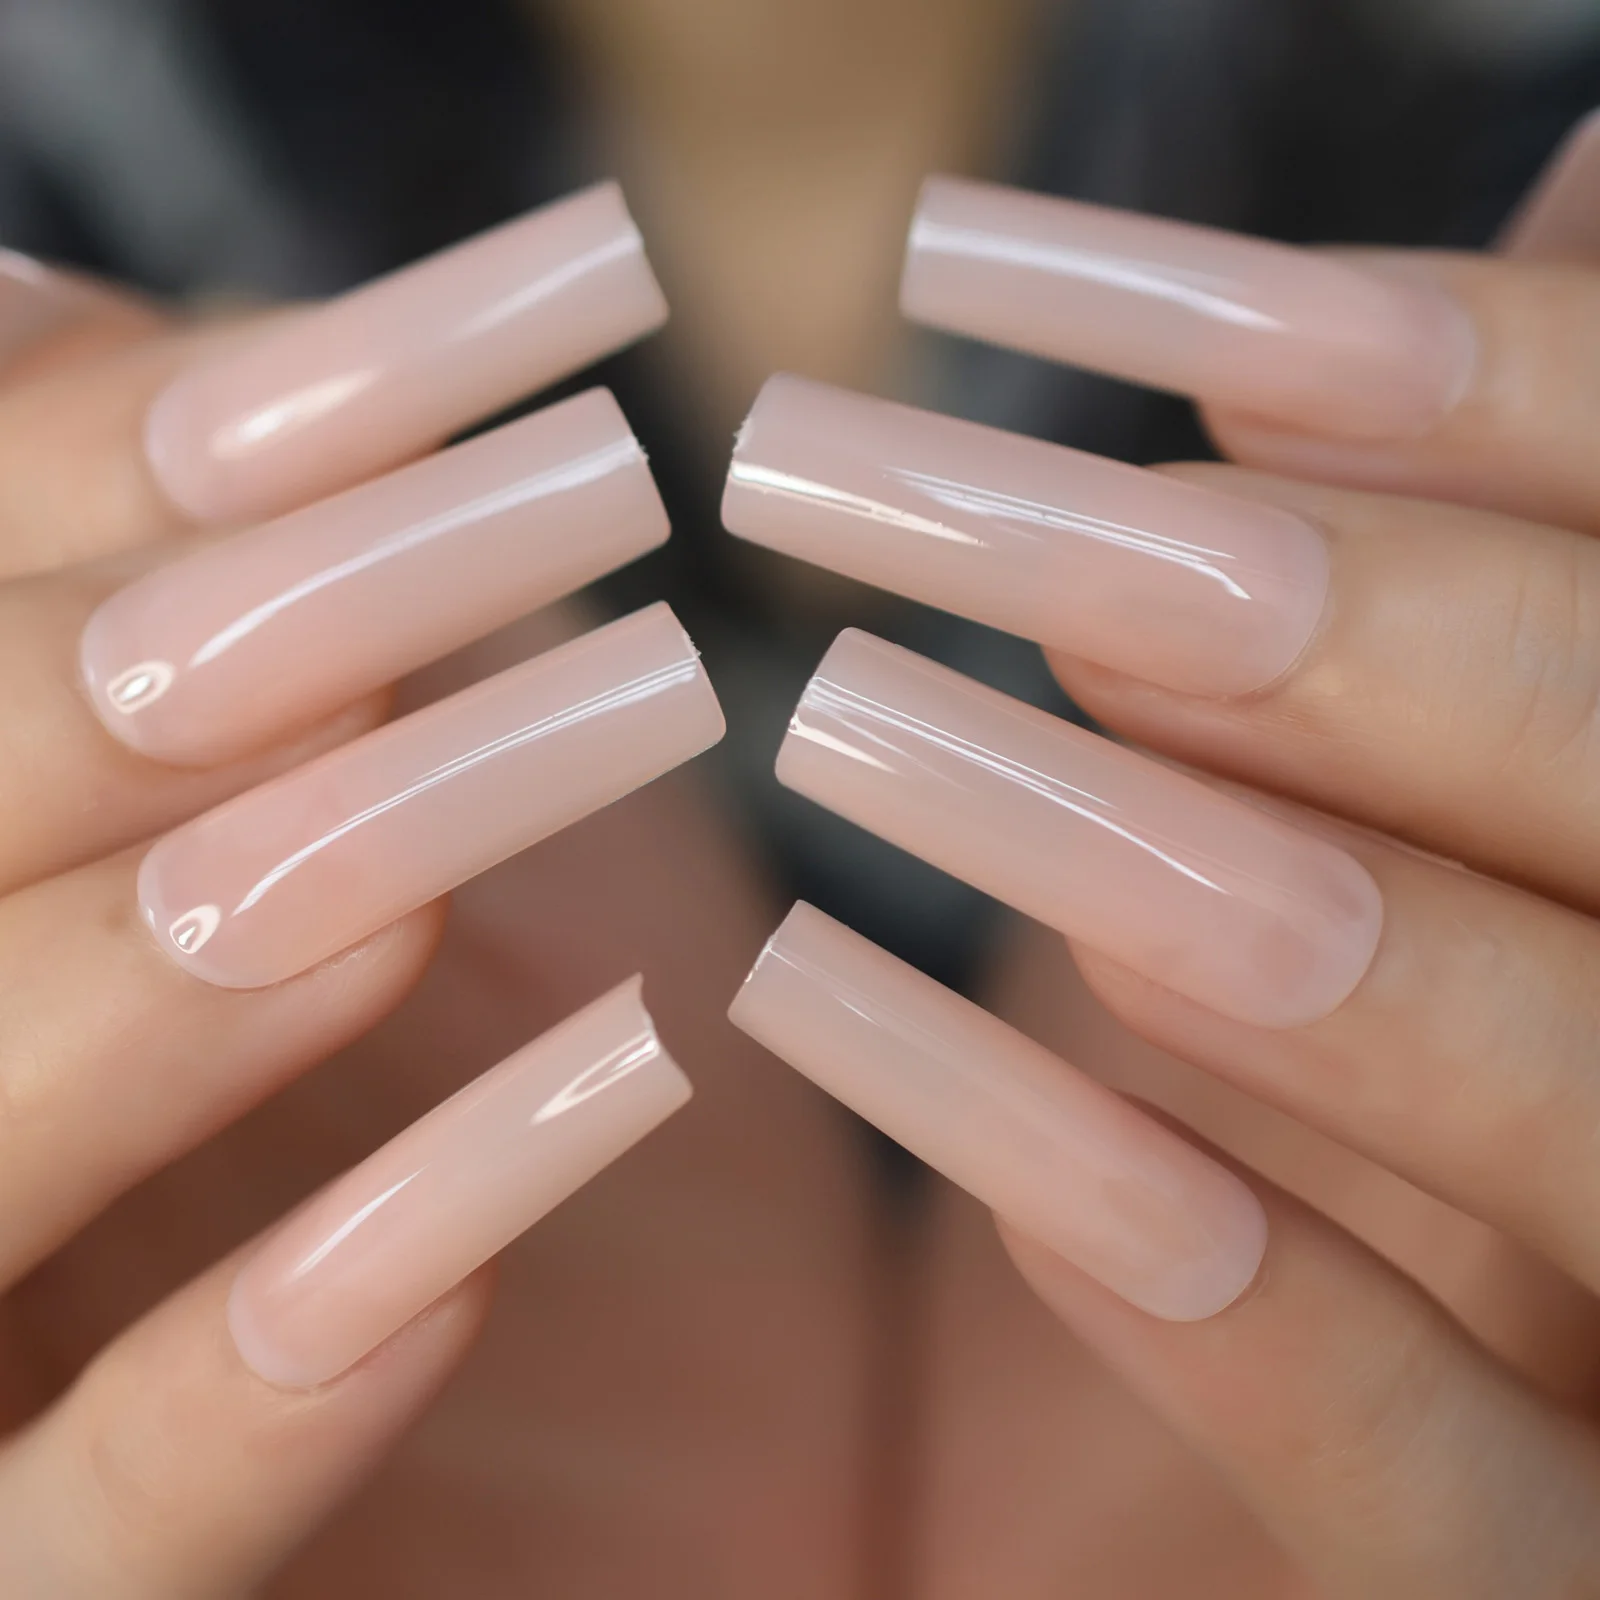 Glossy Pink Nude Fake Nails Extremely Long Square Acrylic Press On Nails Full Cover Gel Nail Art Tools